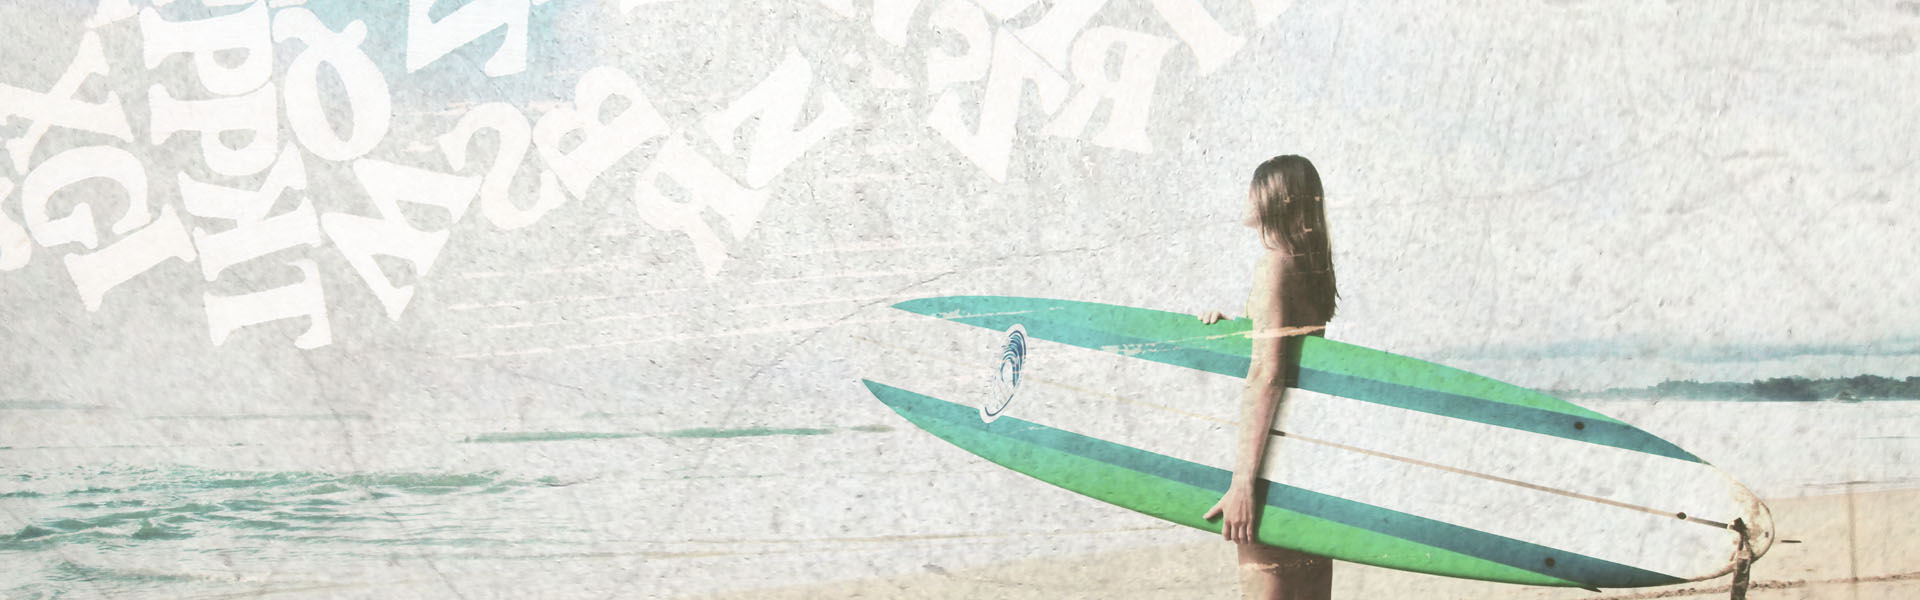 girl standing on a beach holding a surfboard